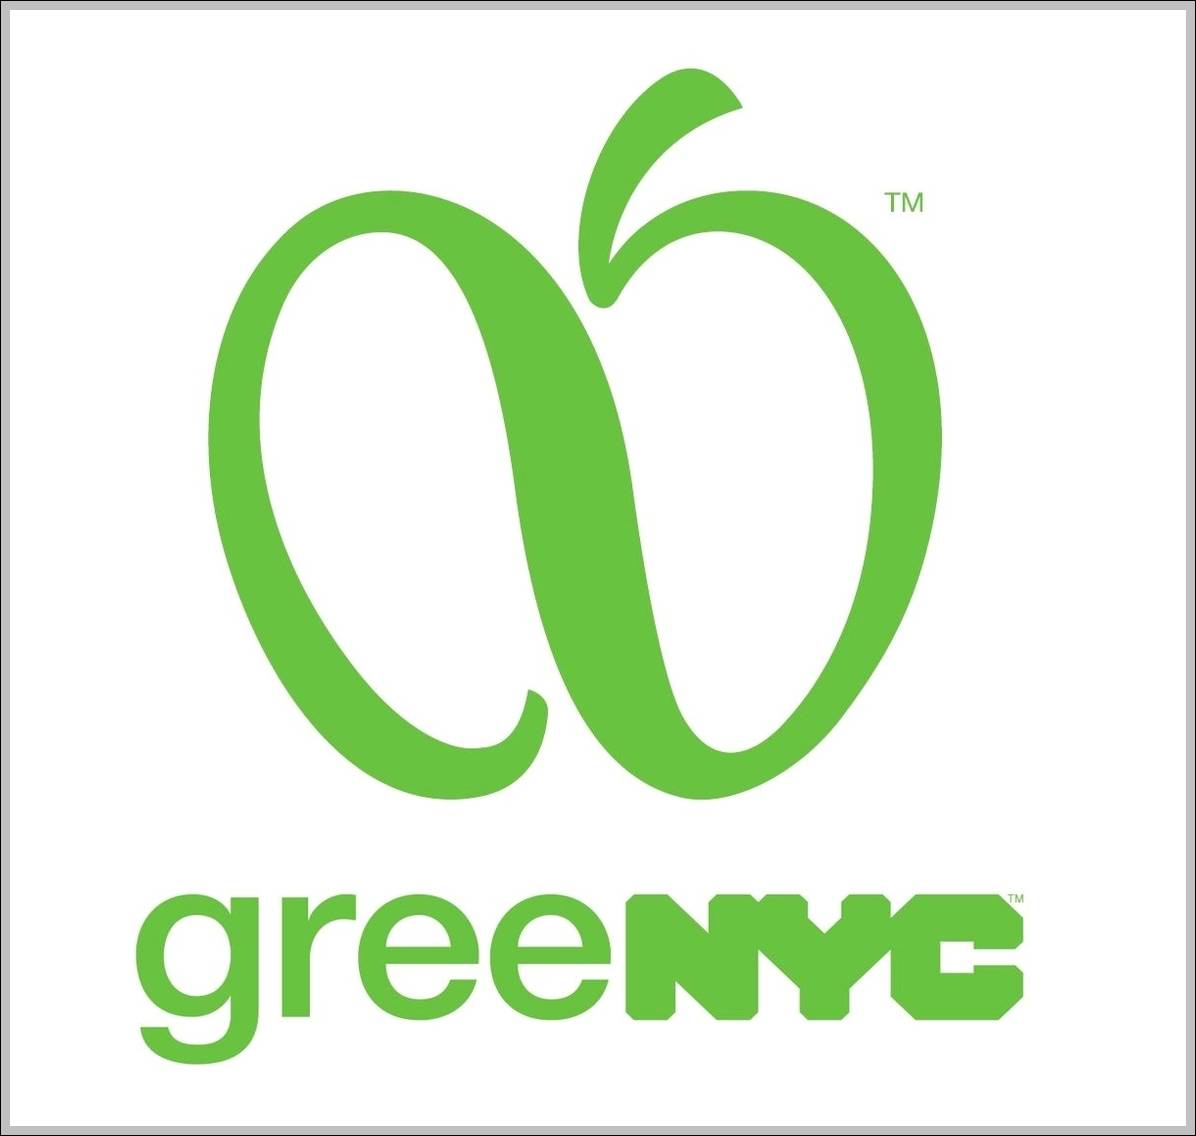 GreeNYC logo NYC logo